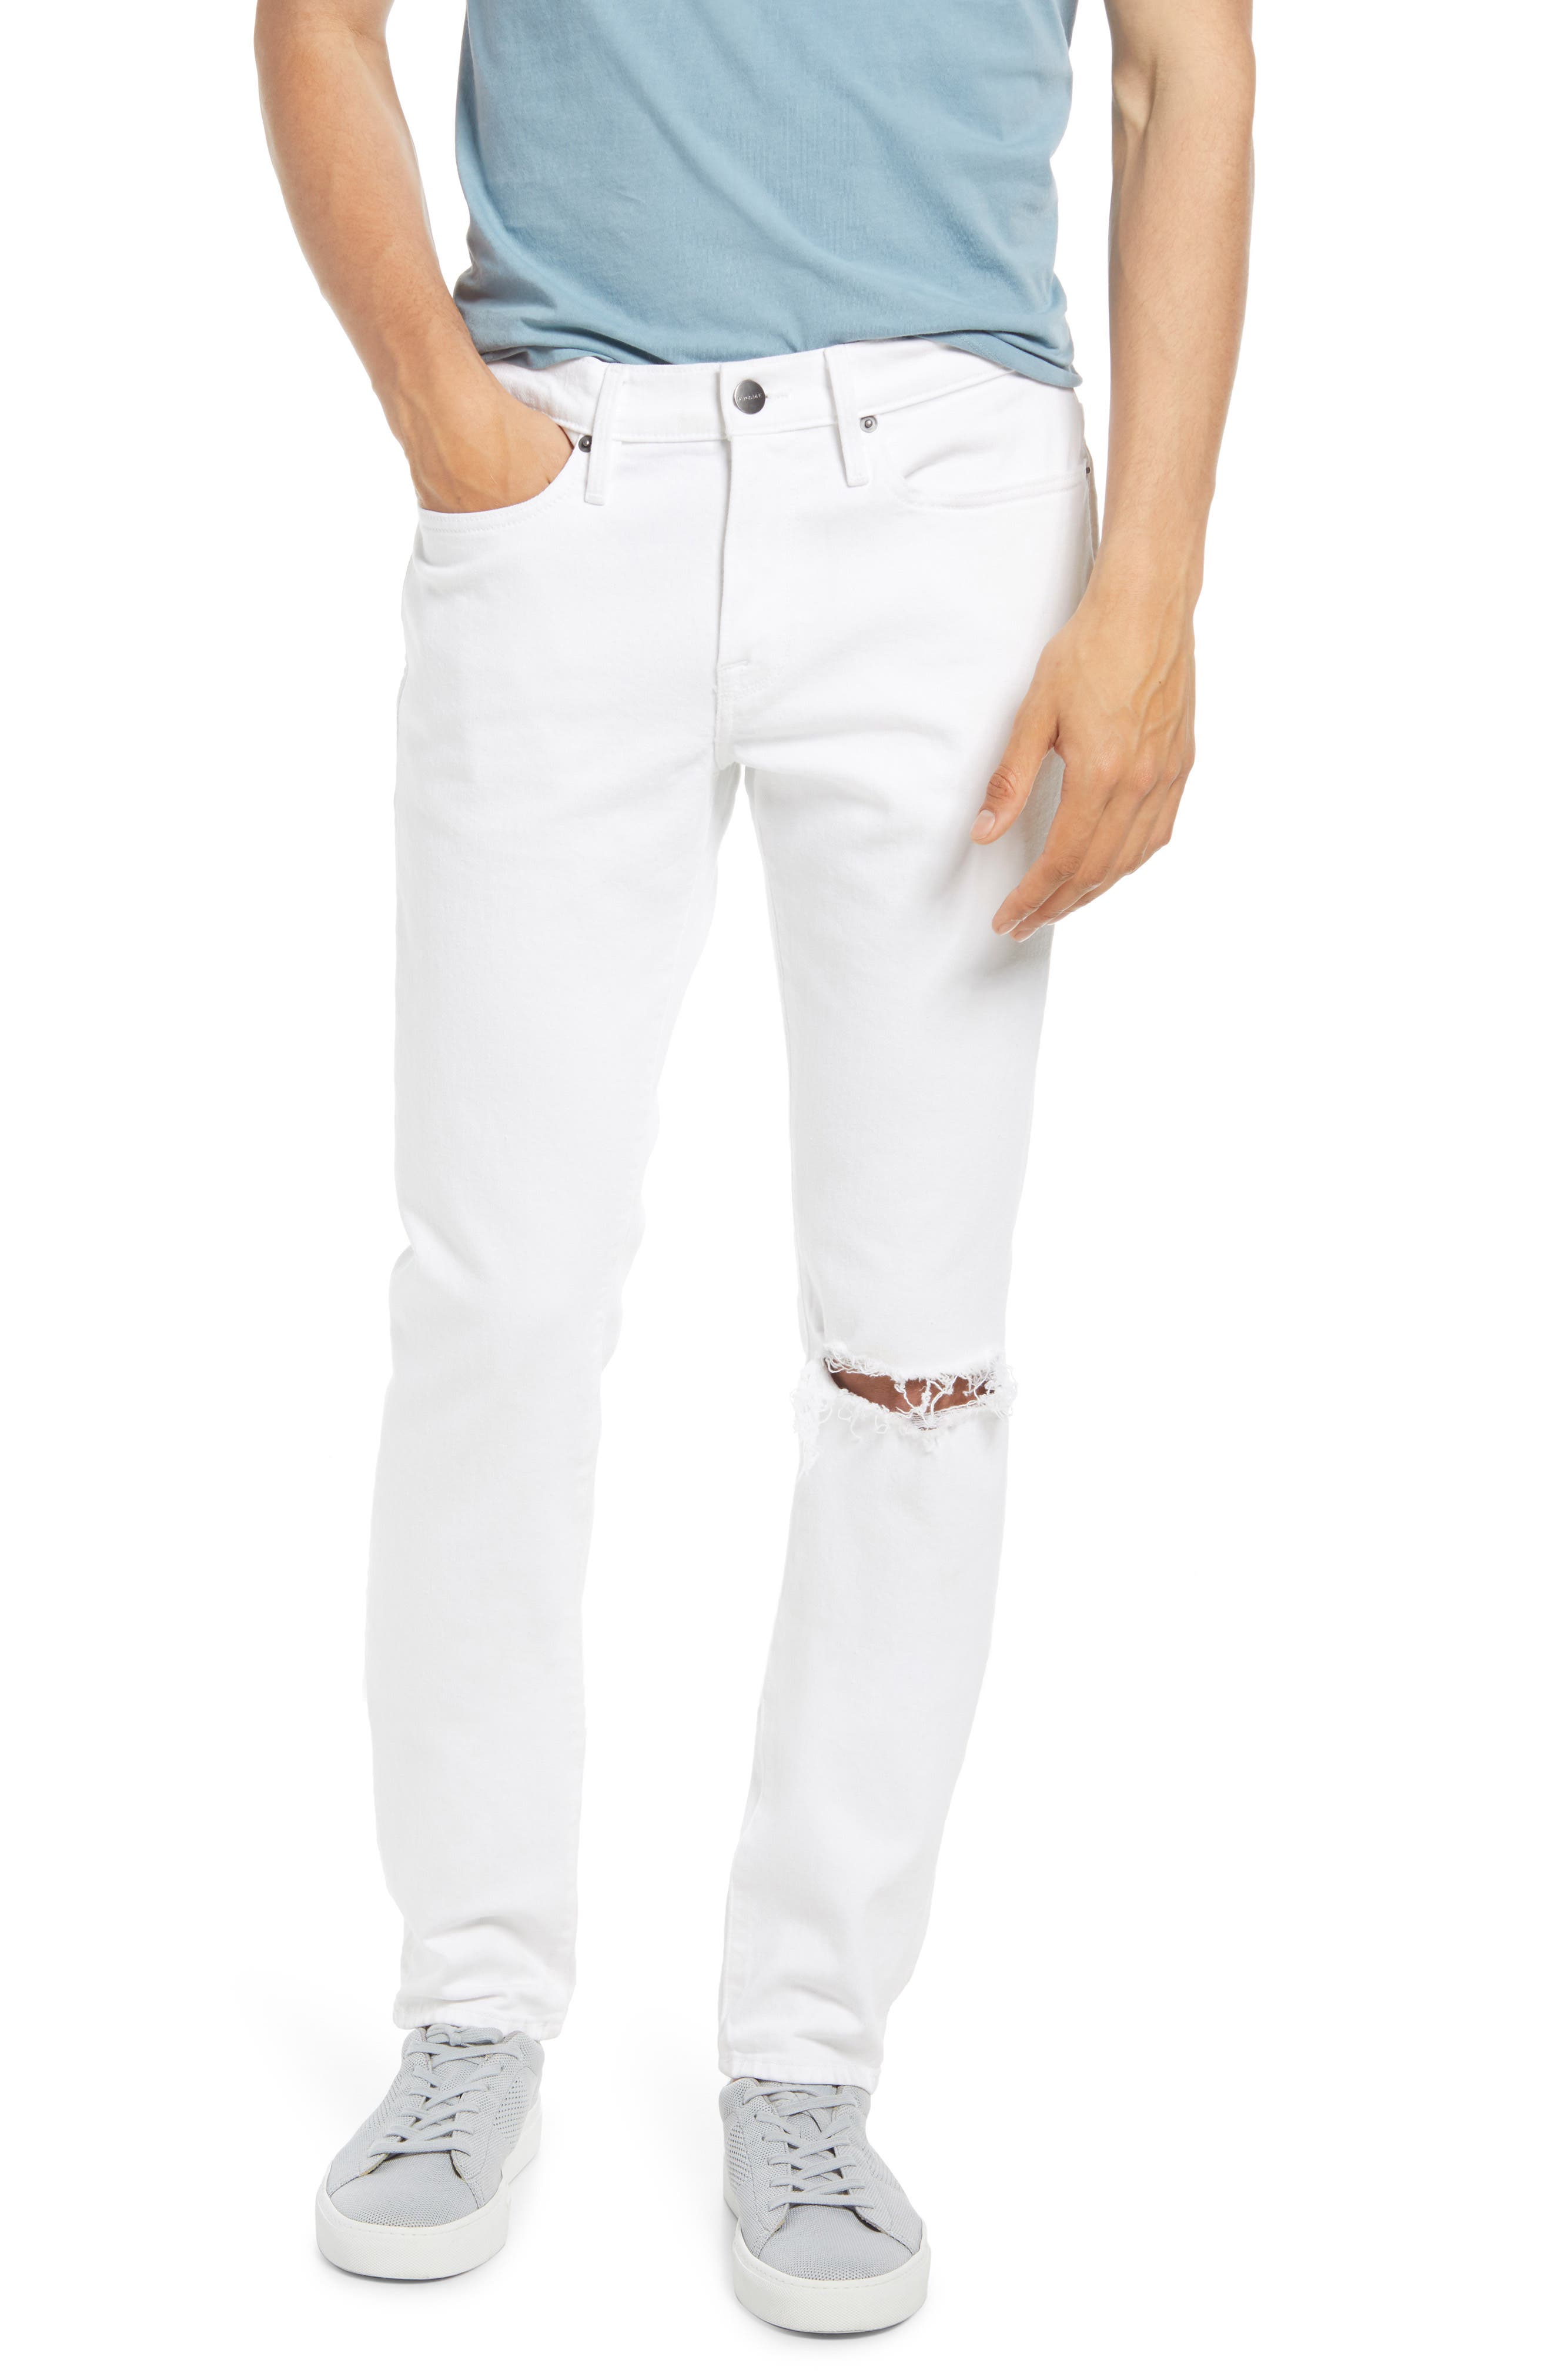 stretch slim fit super urban cotton pants Mens white skinny jeans denim 28-36 